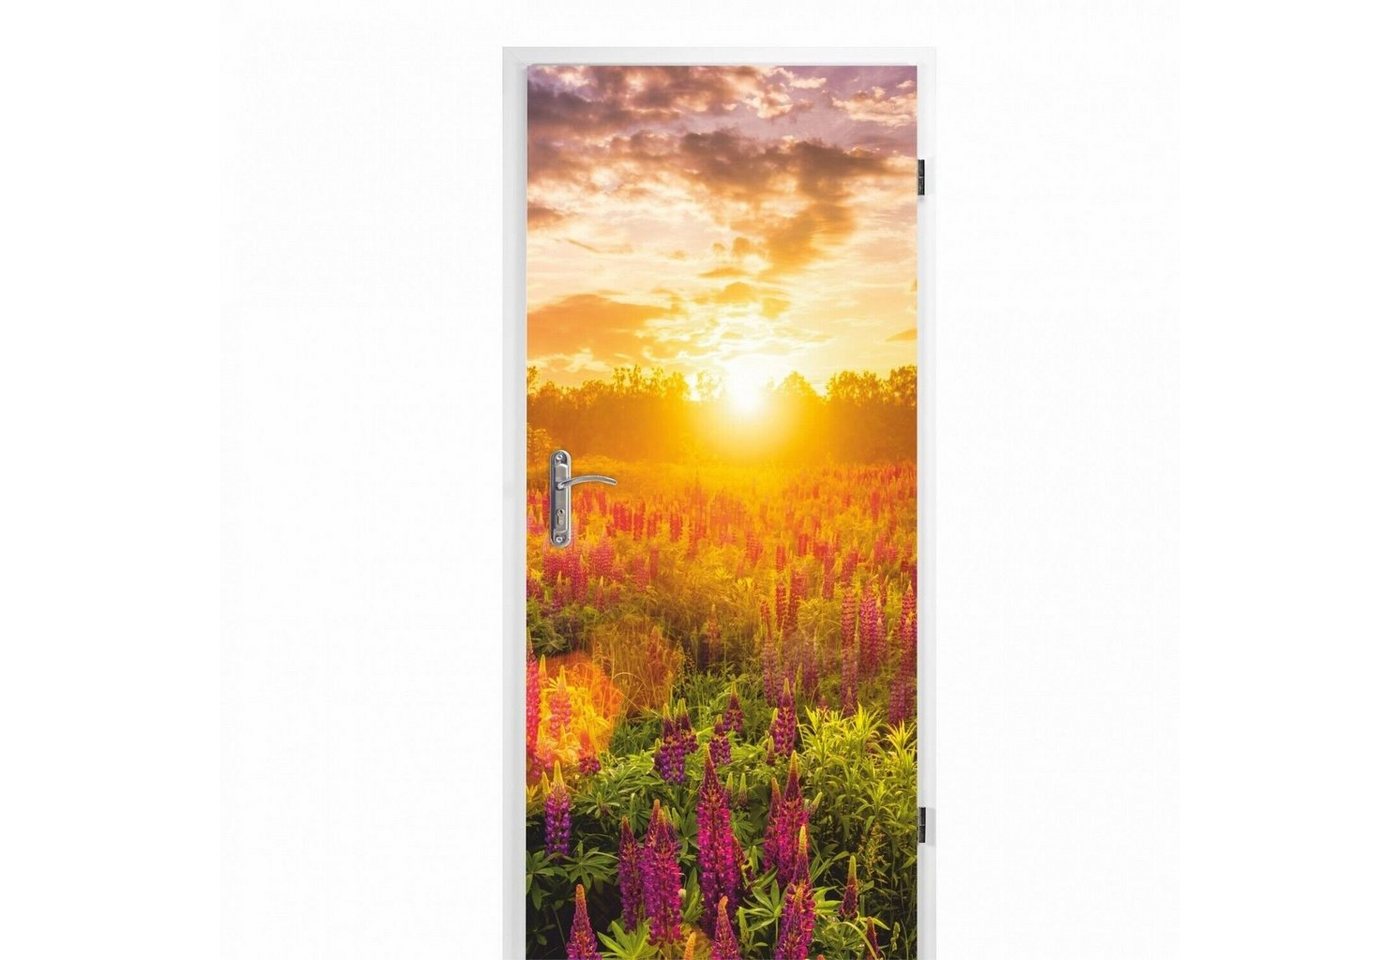 nikima Wandtattoo TB-15 selbstklebendes Türbild – Blumenwiese (PVC-Folie), 0,9 x 2 m selbstklebende Folie von nikima